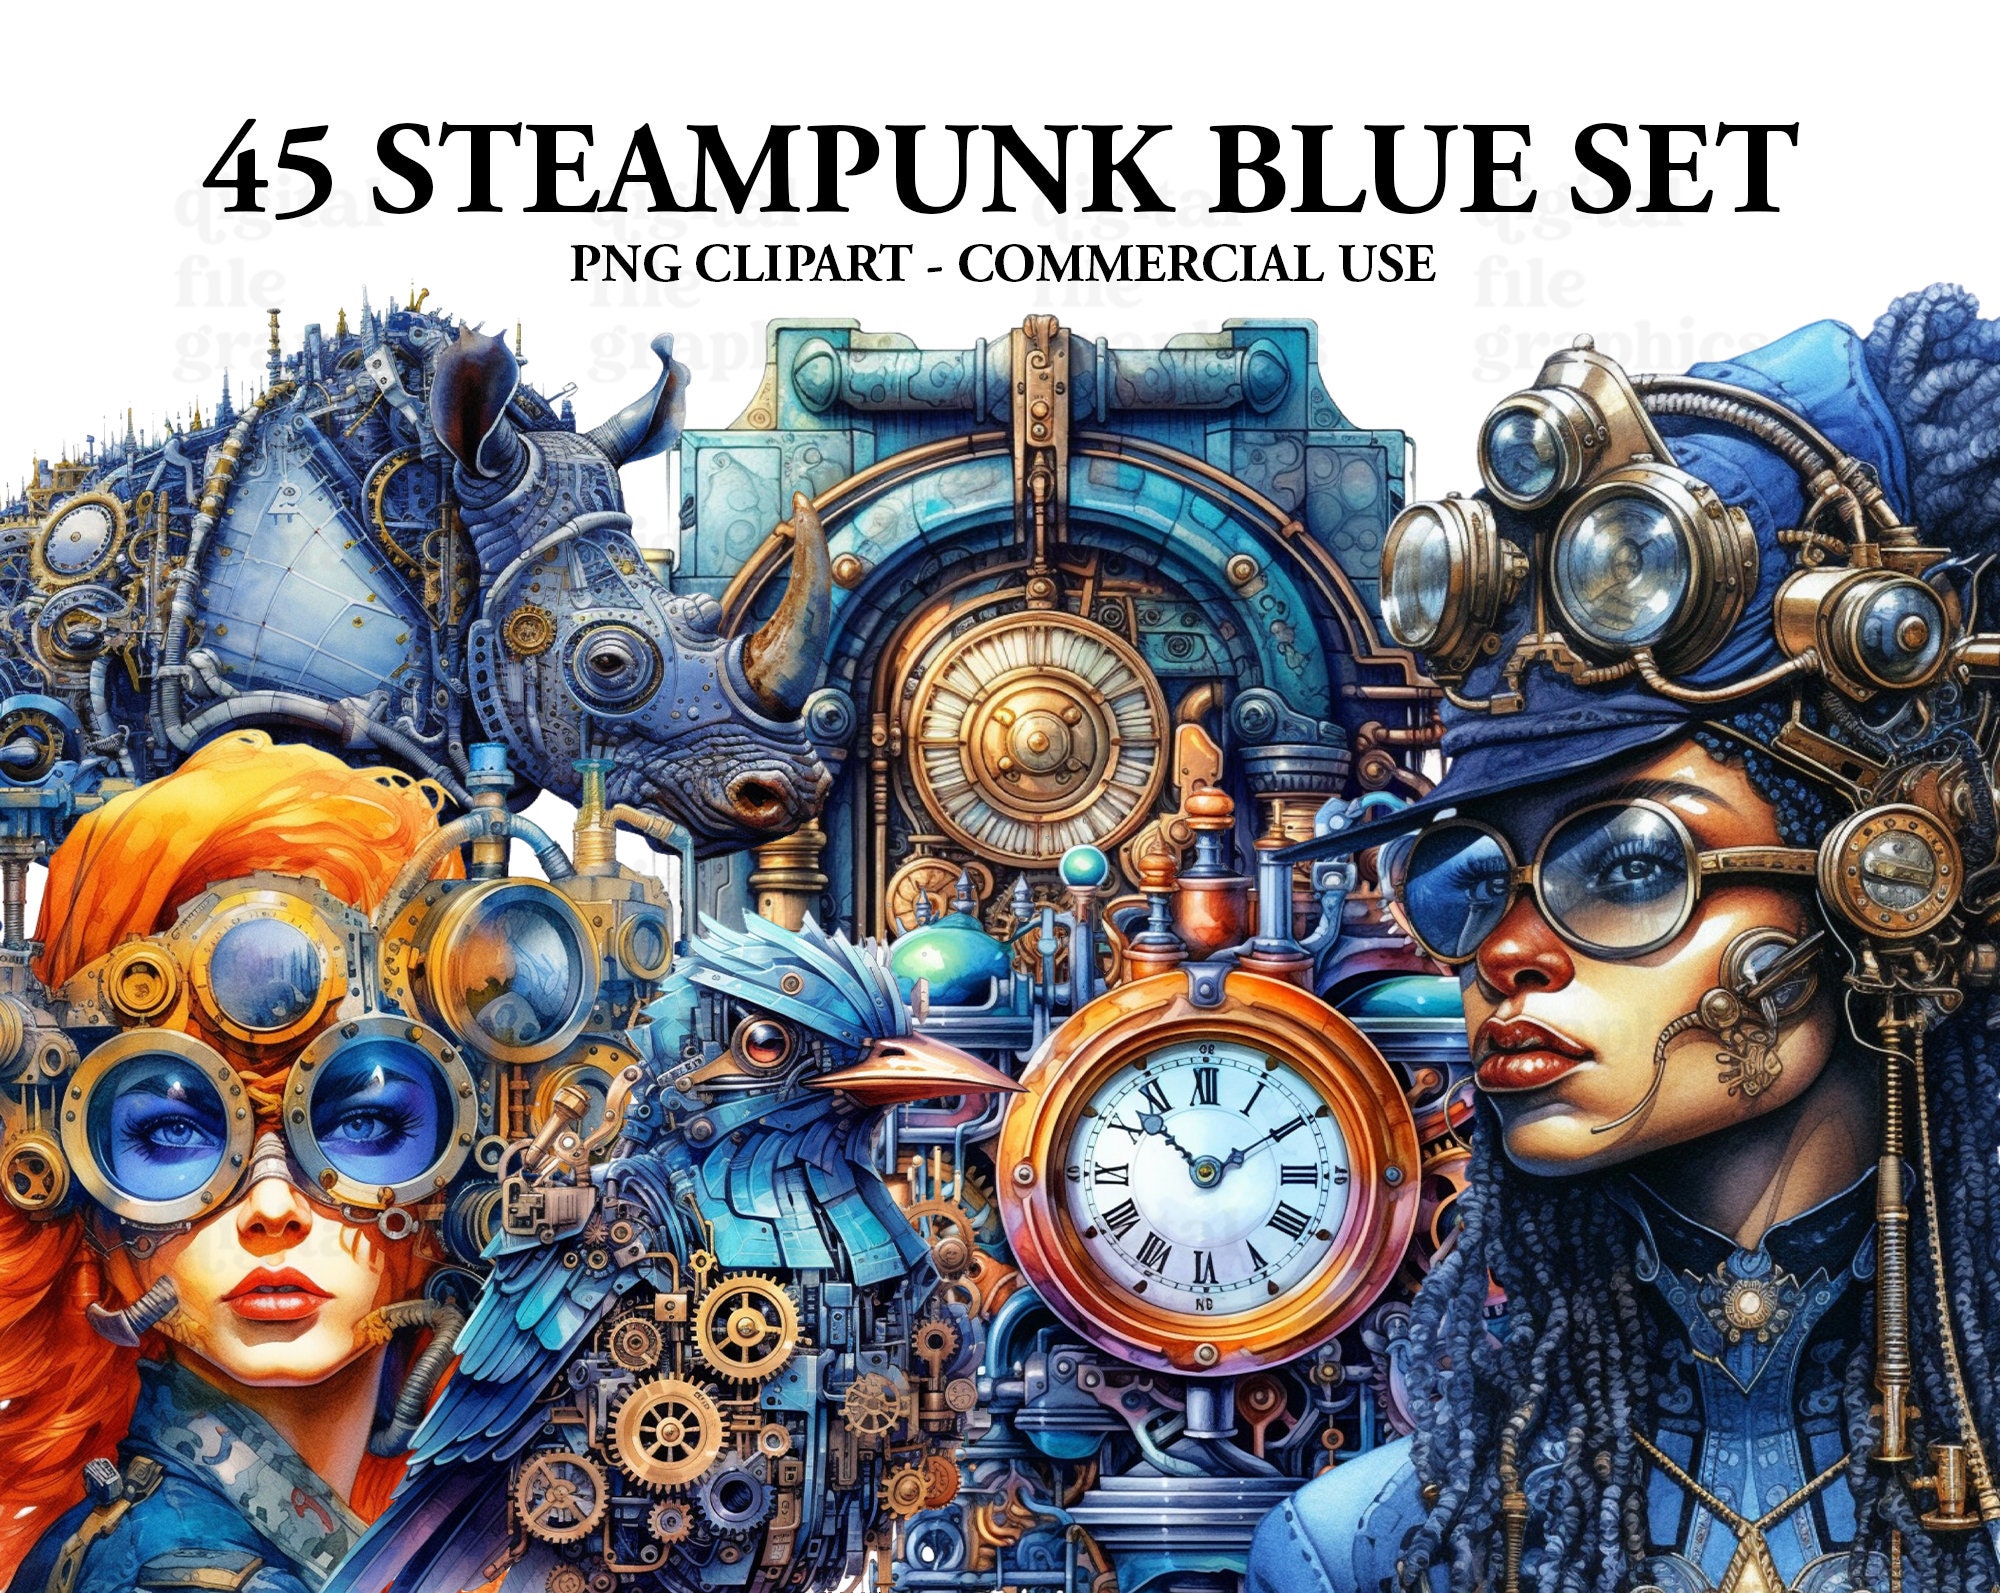 Steampunk Journal & Pen Set - Vintage Collection - Blue - Green - ApolloBox